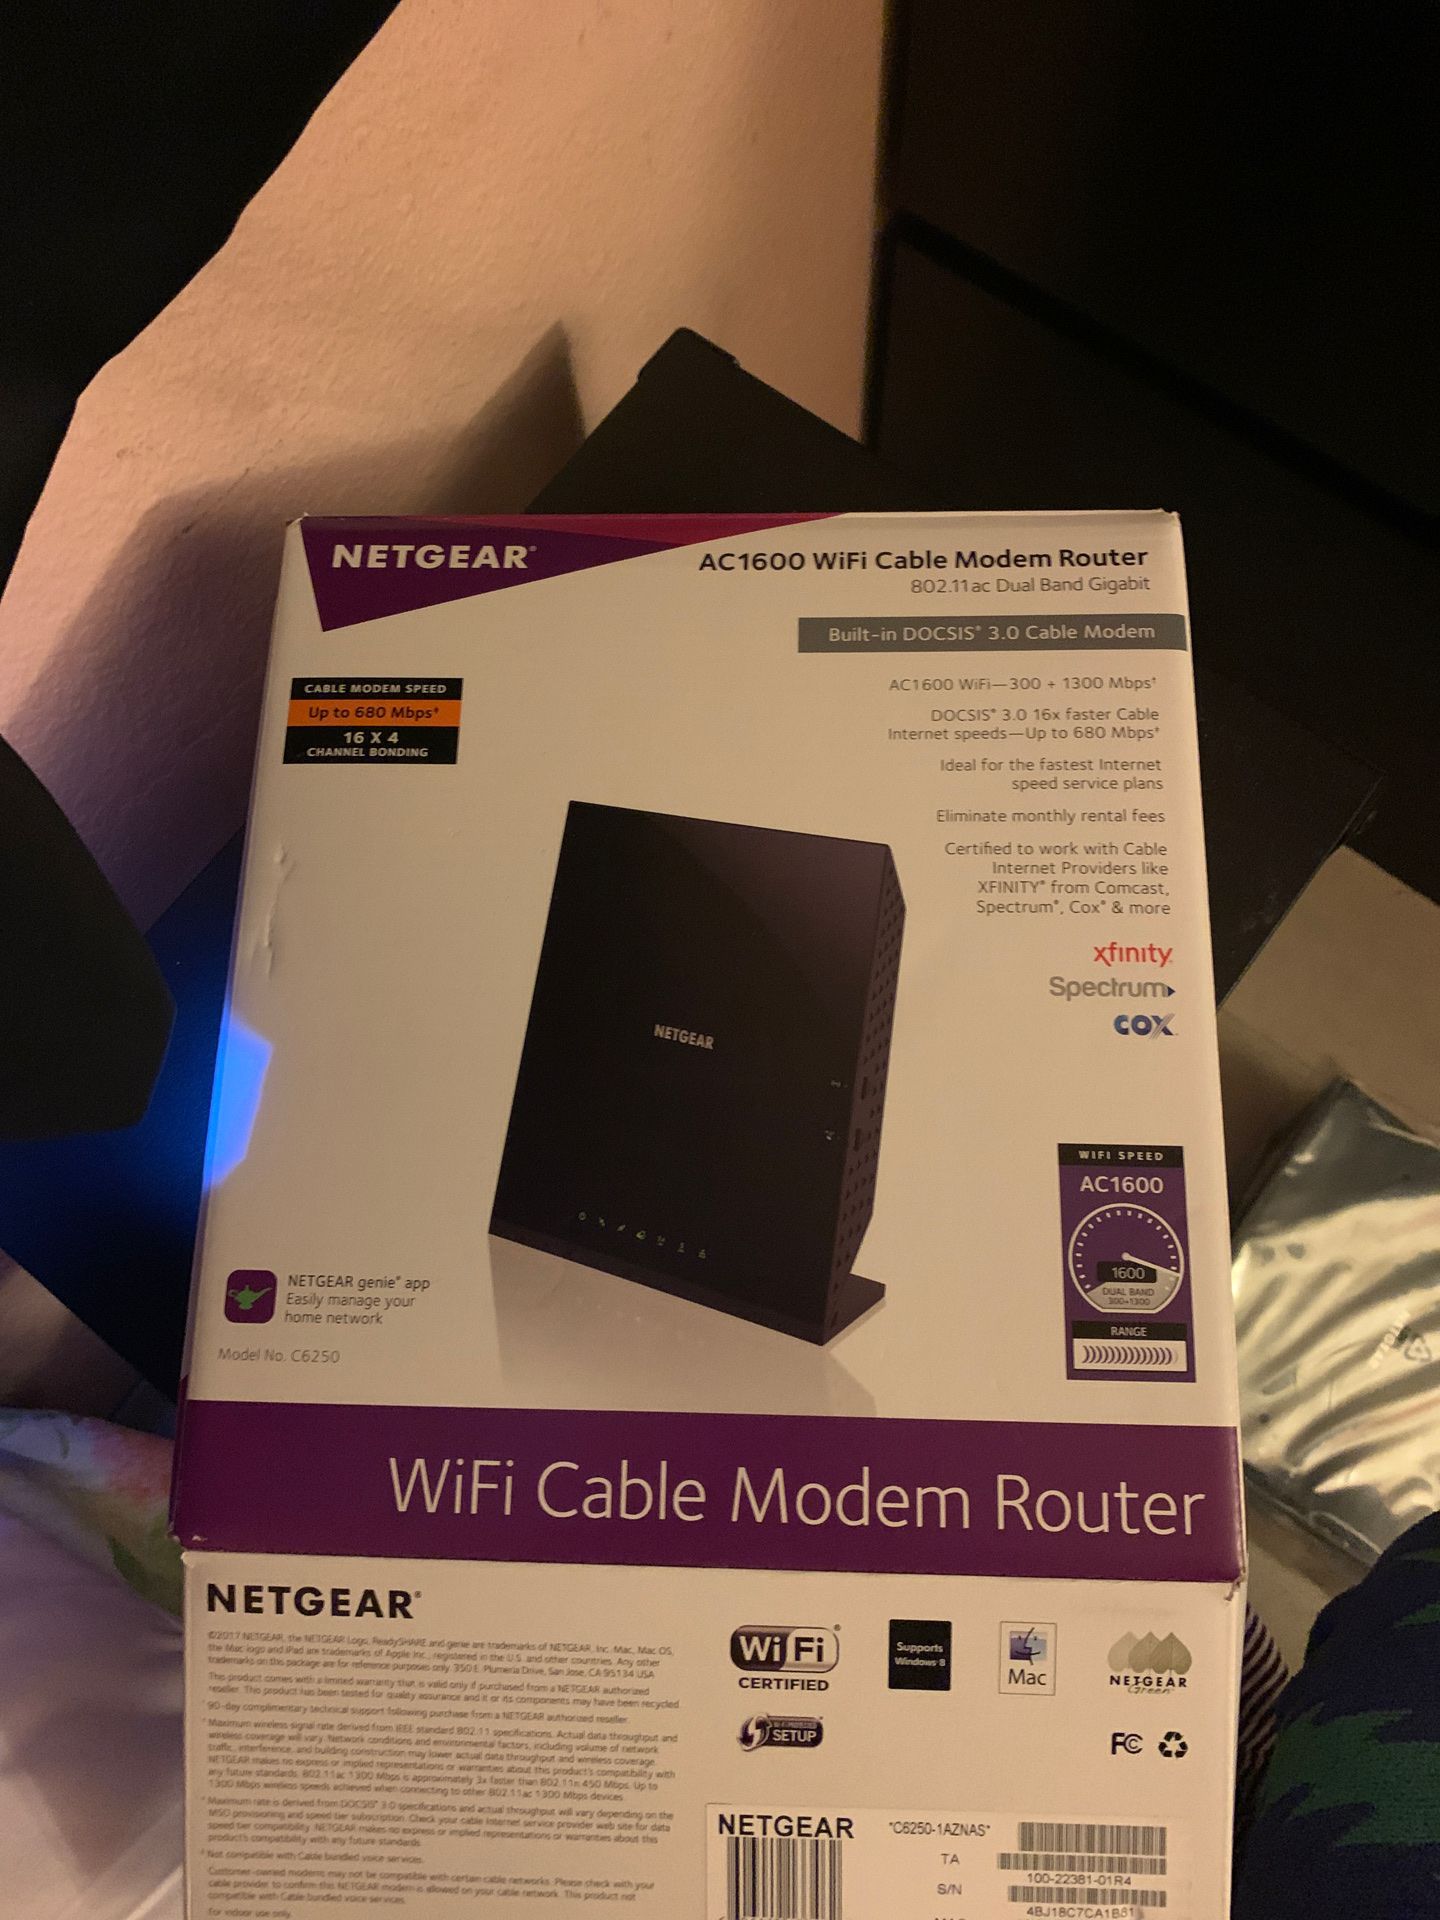 Netgear WiFi cable modem router